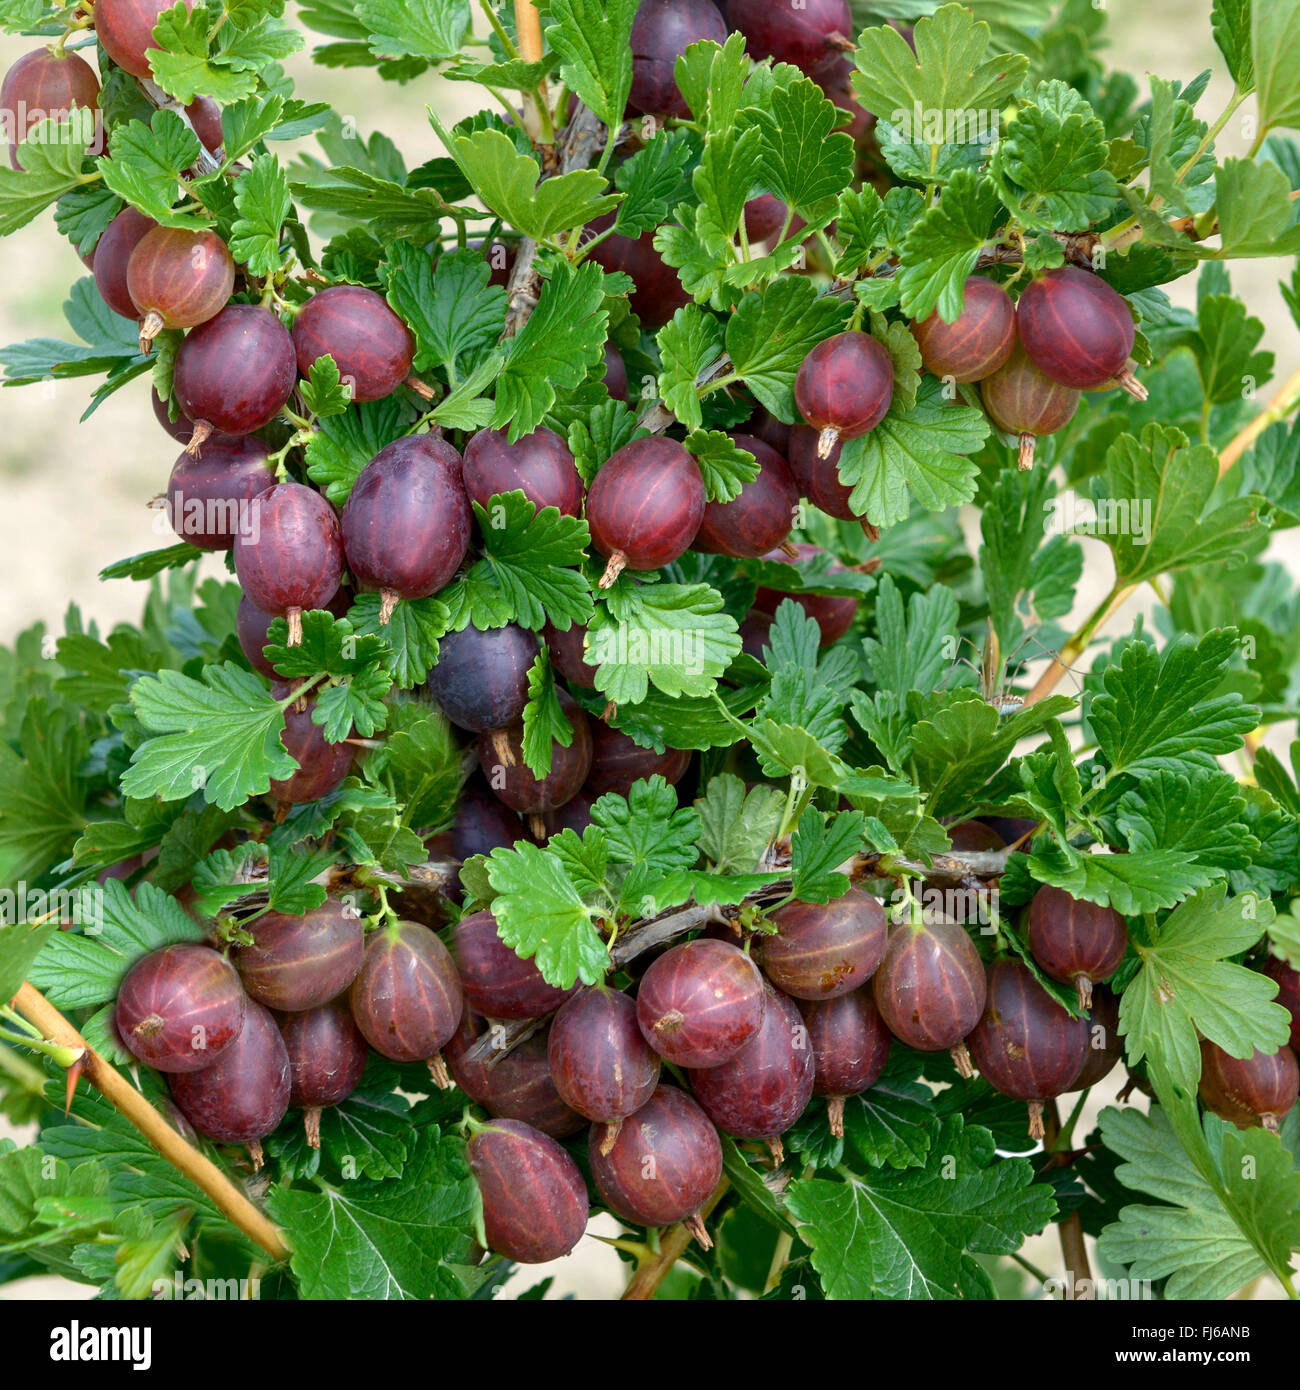 wild gooseberry, European gooseberry (Ribes uva-crispa 'Hinnomaeki Rot', Ribes uva-crispa Hinnomaeki Rot), cultivar Hinnomaeki Rot Stock Photo